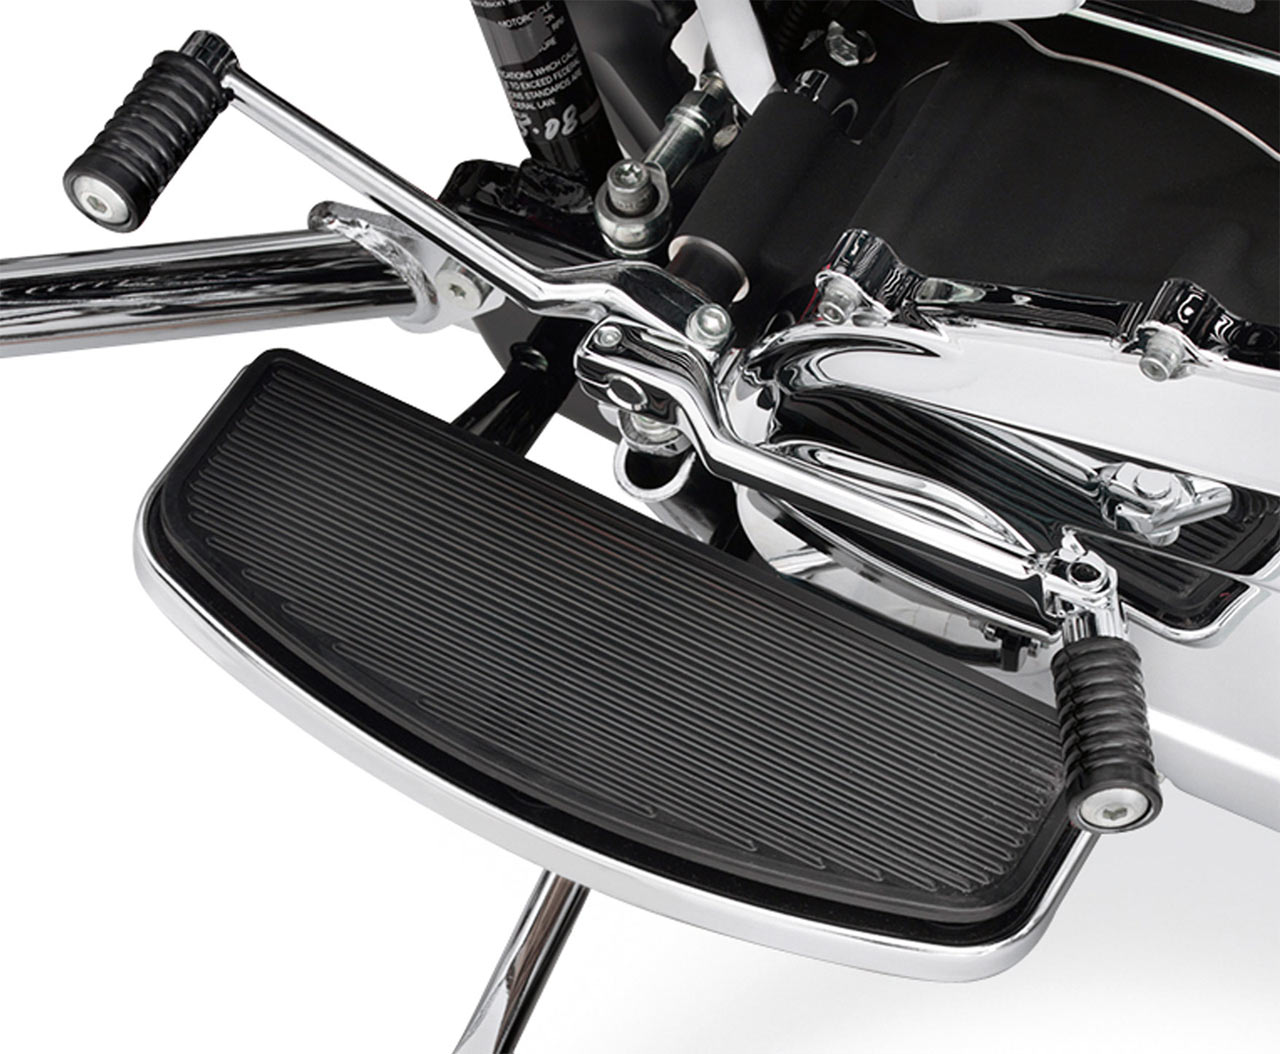 33876 07 Folding Heel Shifter At Thunderbike Shop